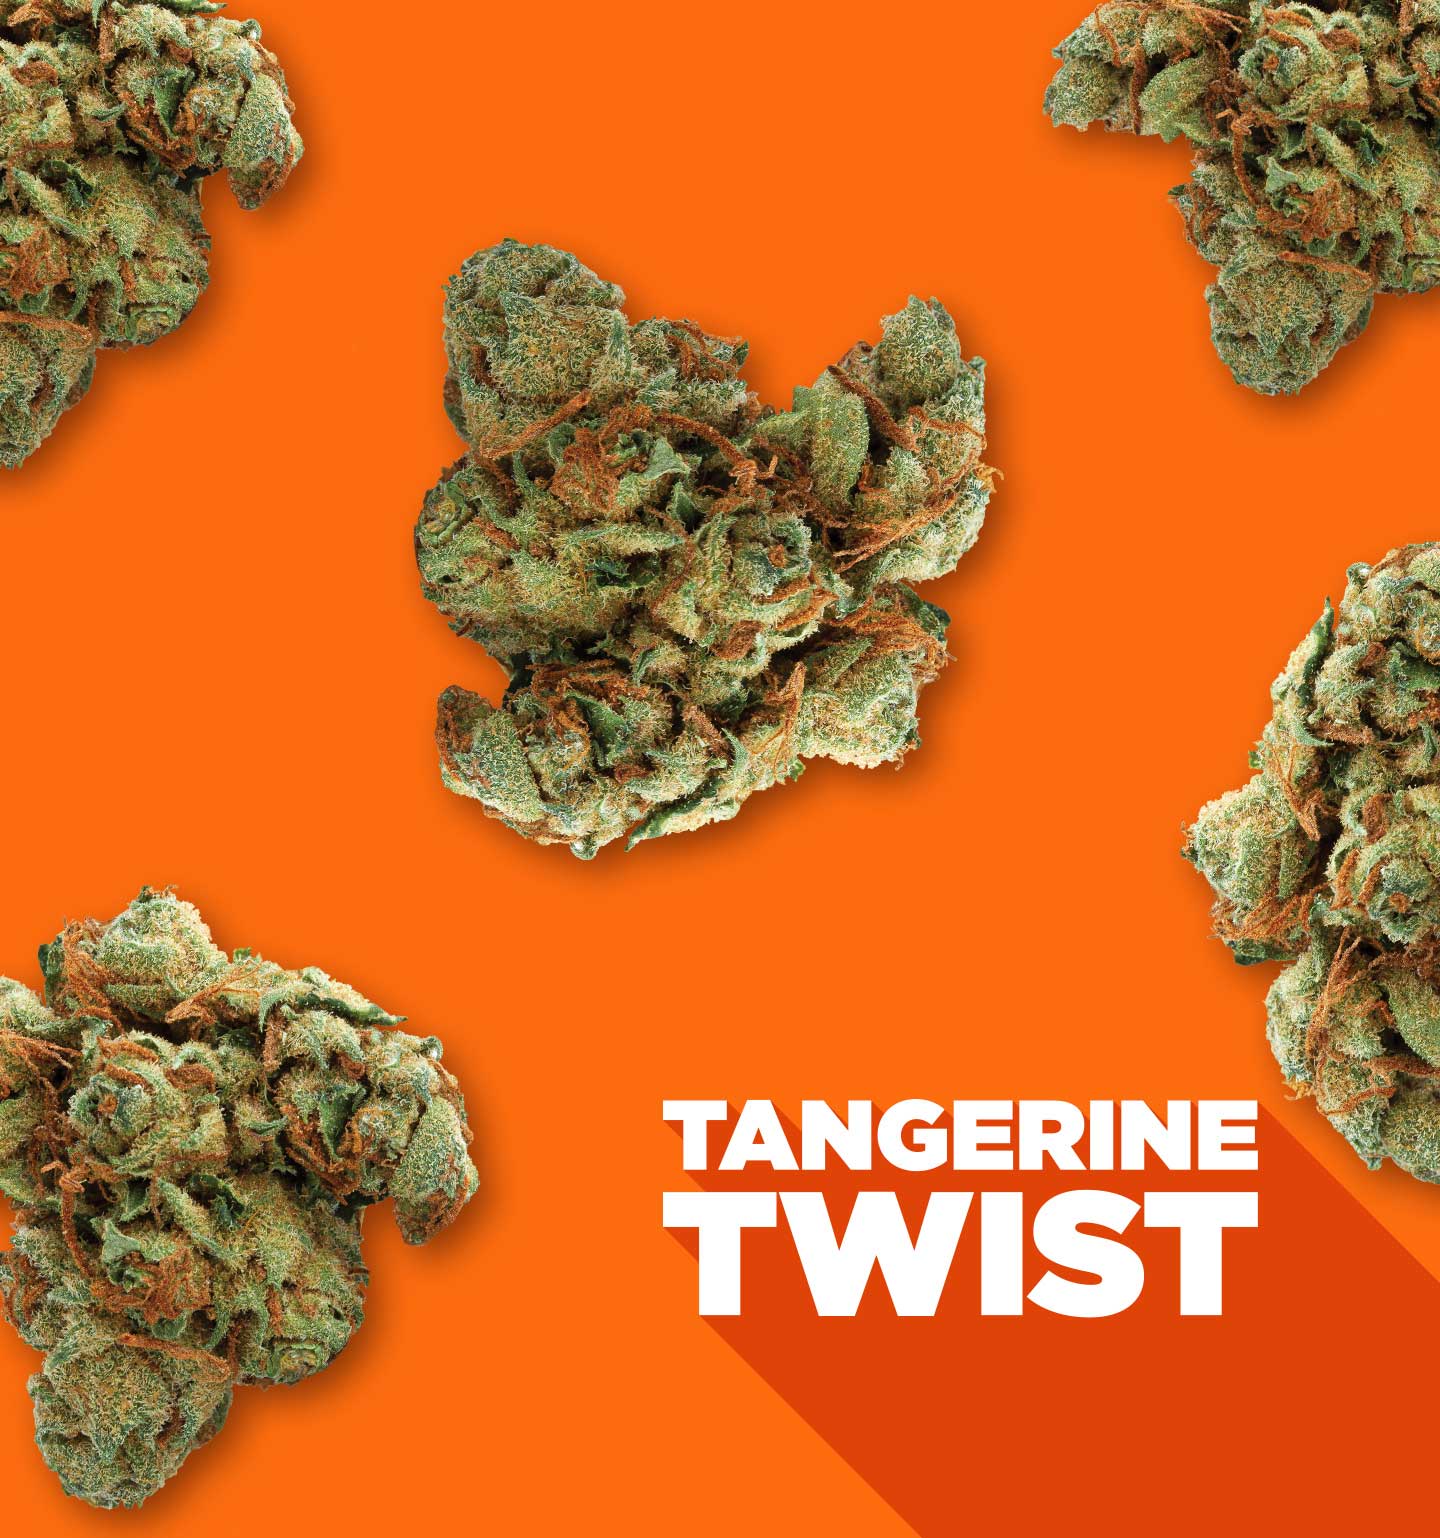 Tangerine Twist with bud